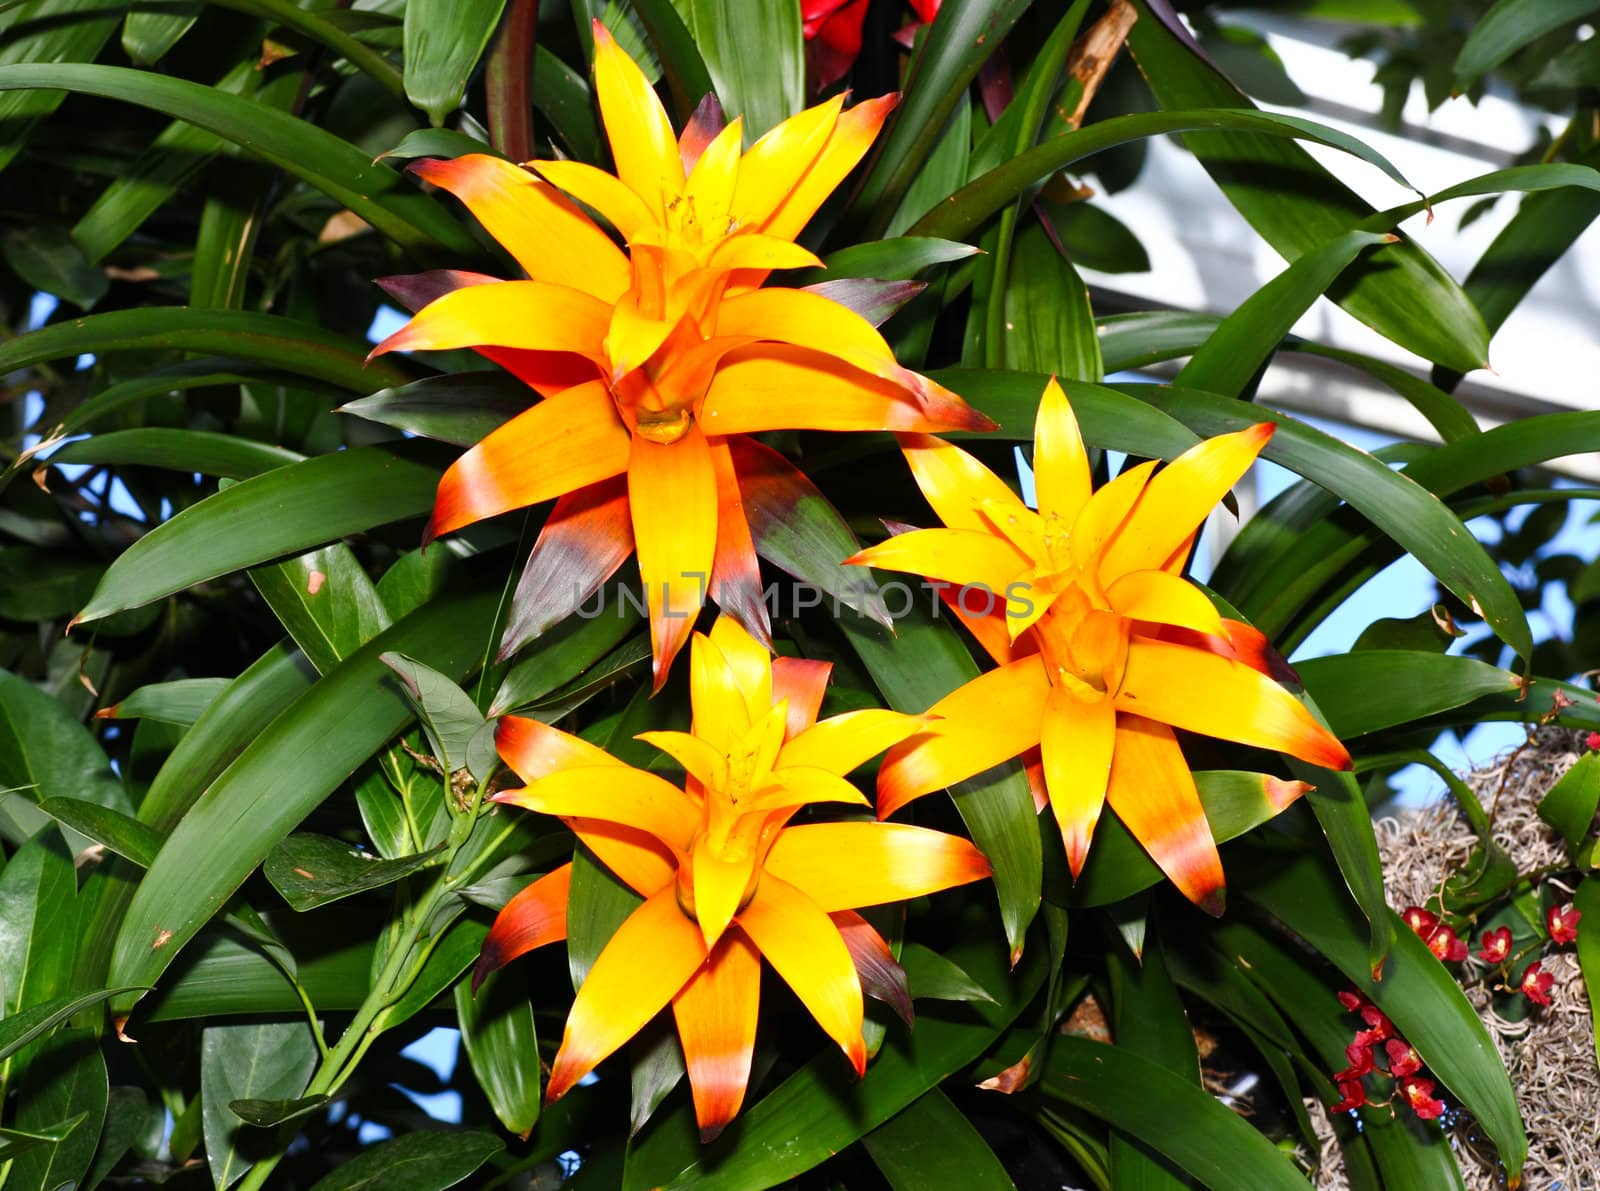 Flowers at a botanic garden in Florida  